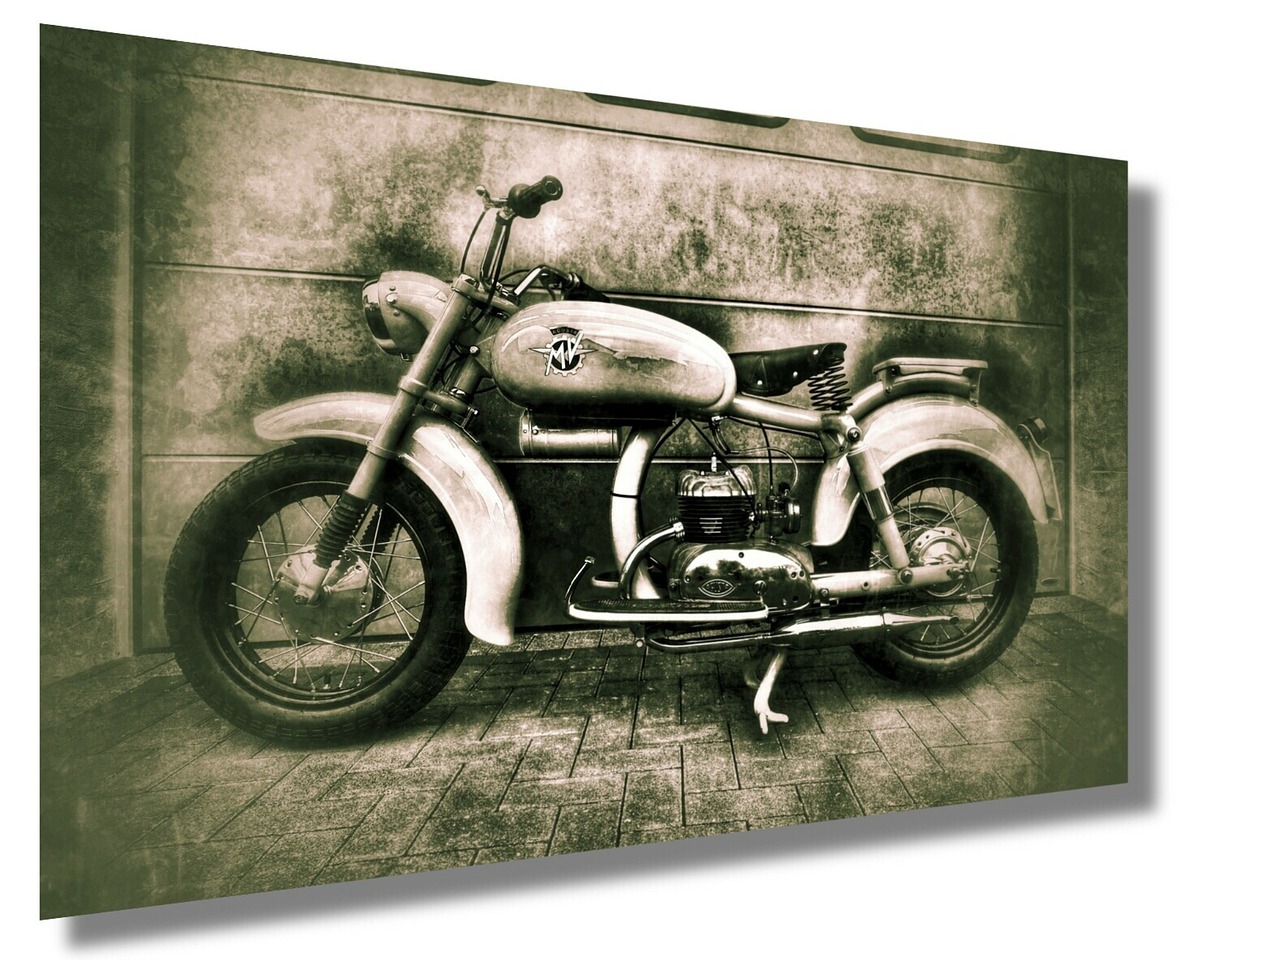 mv augusta old motorcycle oldtimer free photo